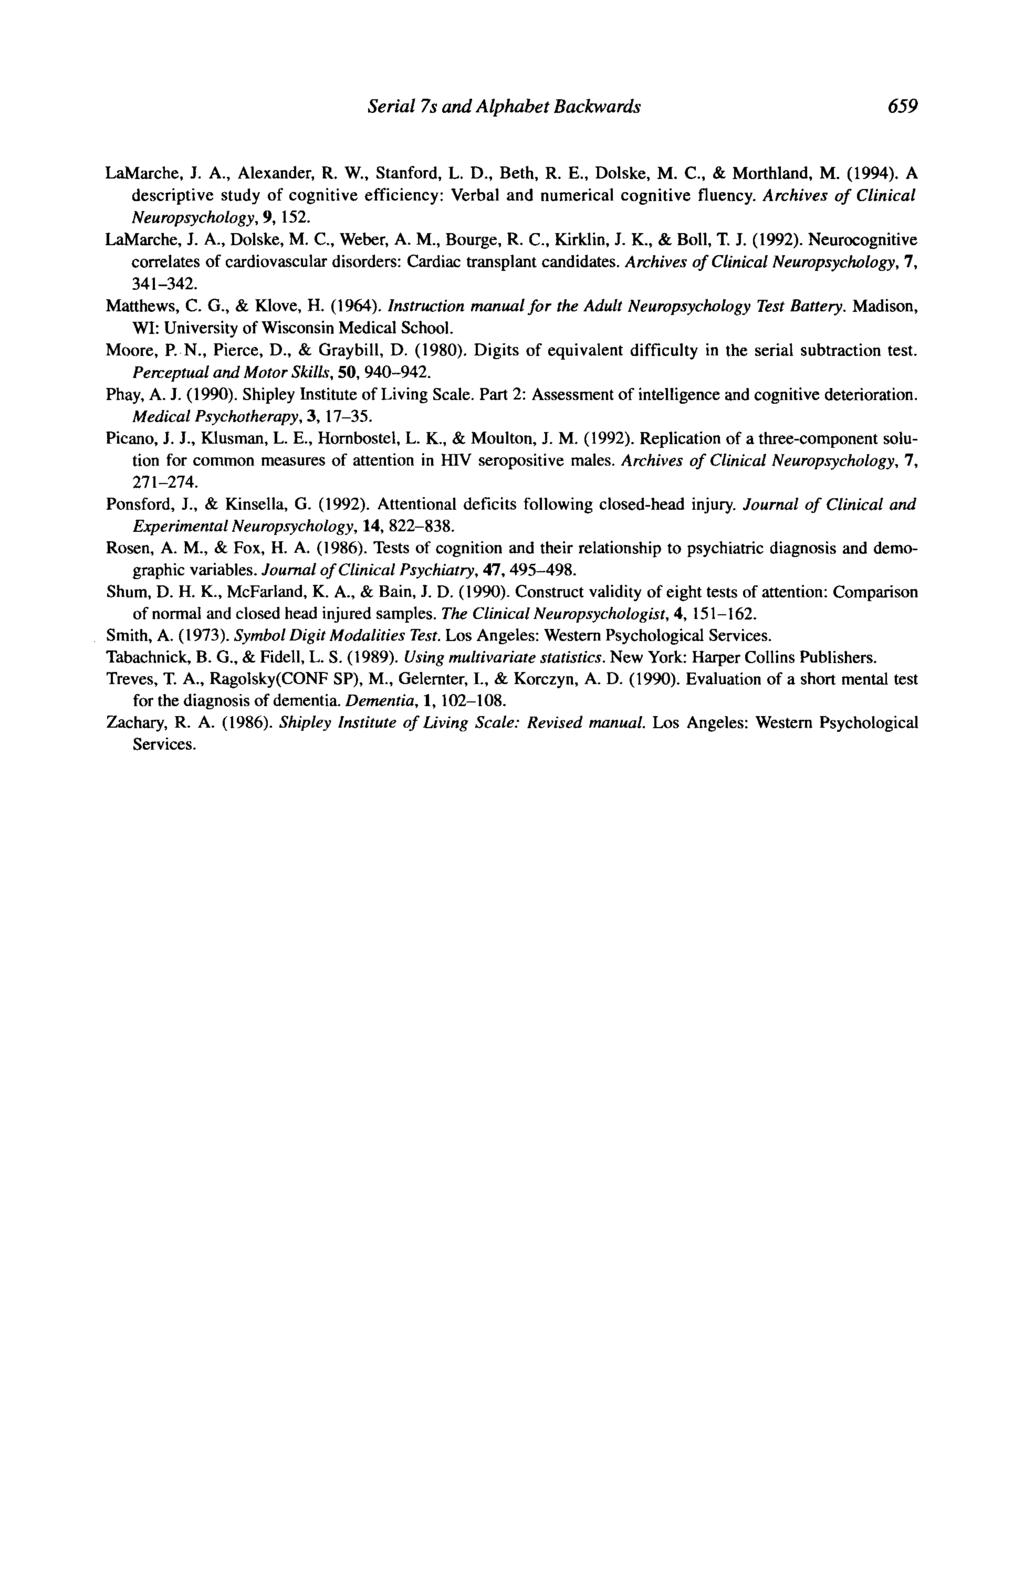 Serial 7s and Alphabet Backwards 659 LaMarche, J. A., Alexander, R. W., Stanford, L. D., Beth, R. E., Dolske, M. C., & Morthland, M. (1994).